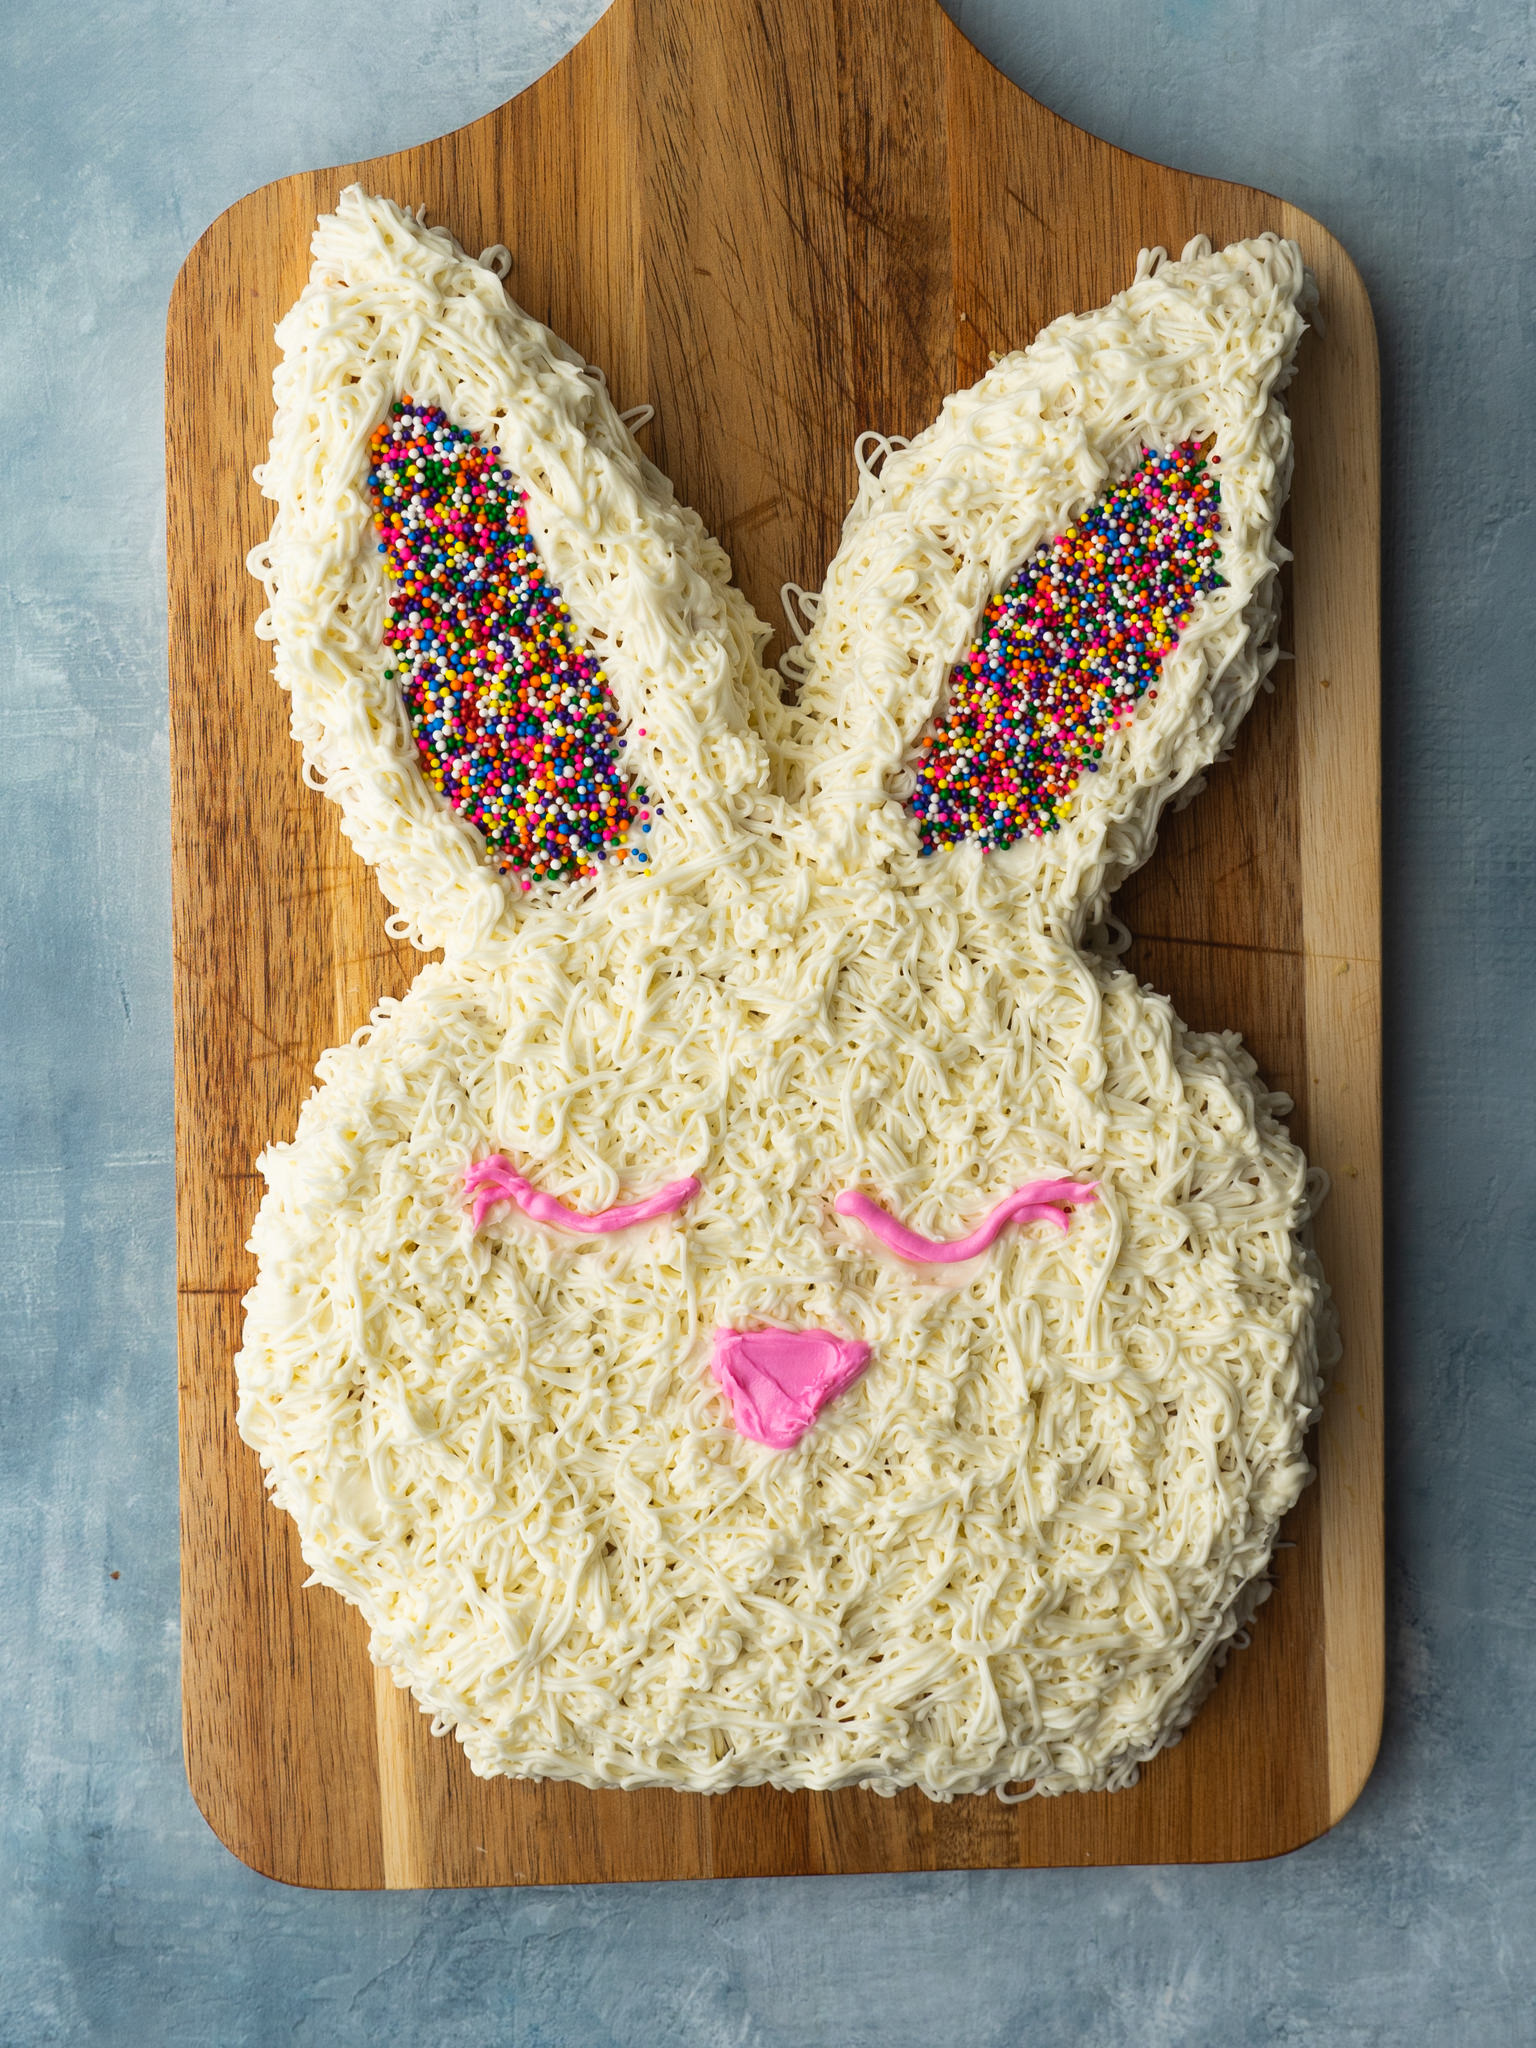 Bunny Butt Cupcakes - Easter Cupcakes Recipe - Veena Azmanov